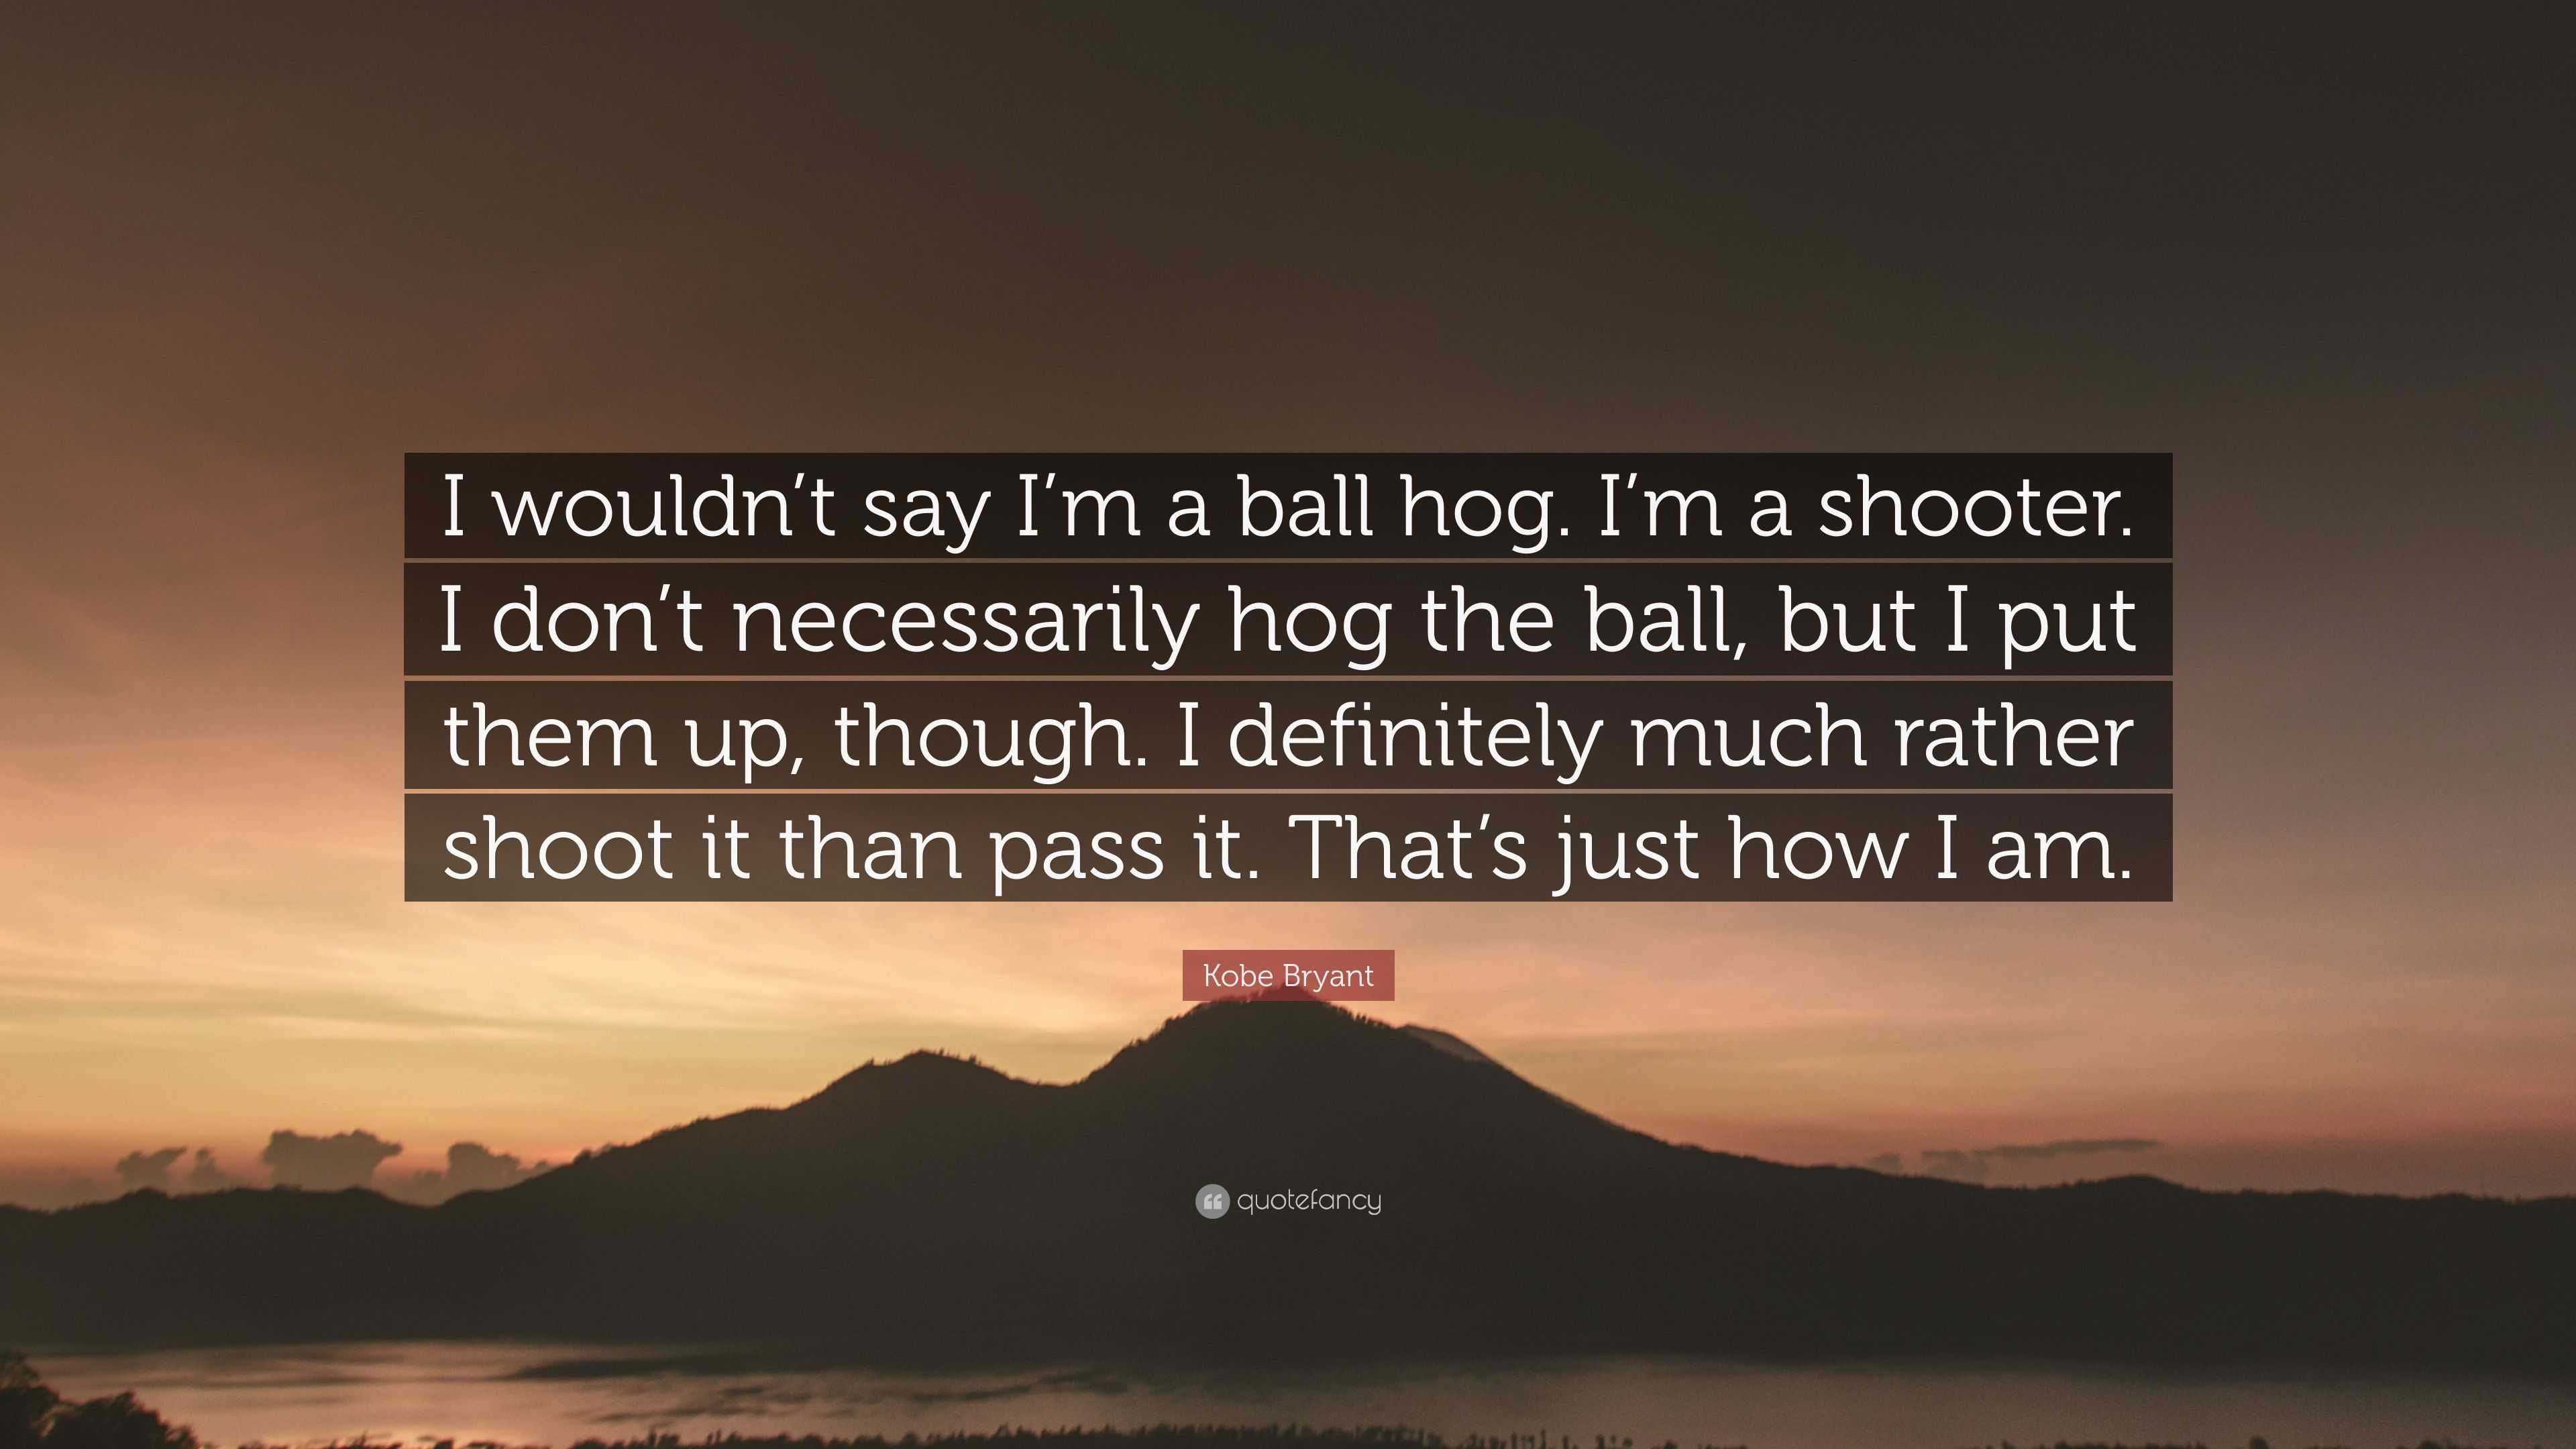 Kobe Bryant Quote: “I wouldn’t say I’m a ball hog. I’m a shooter. I don ...